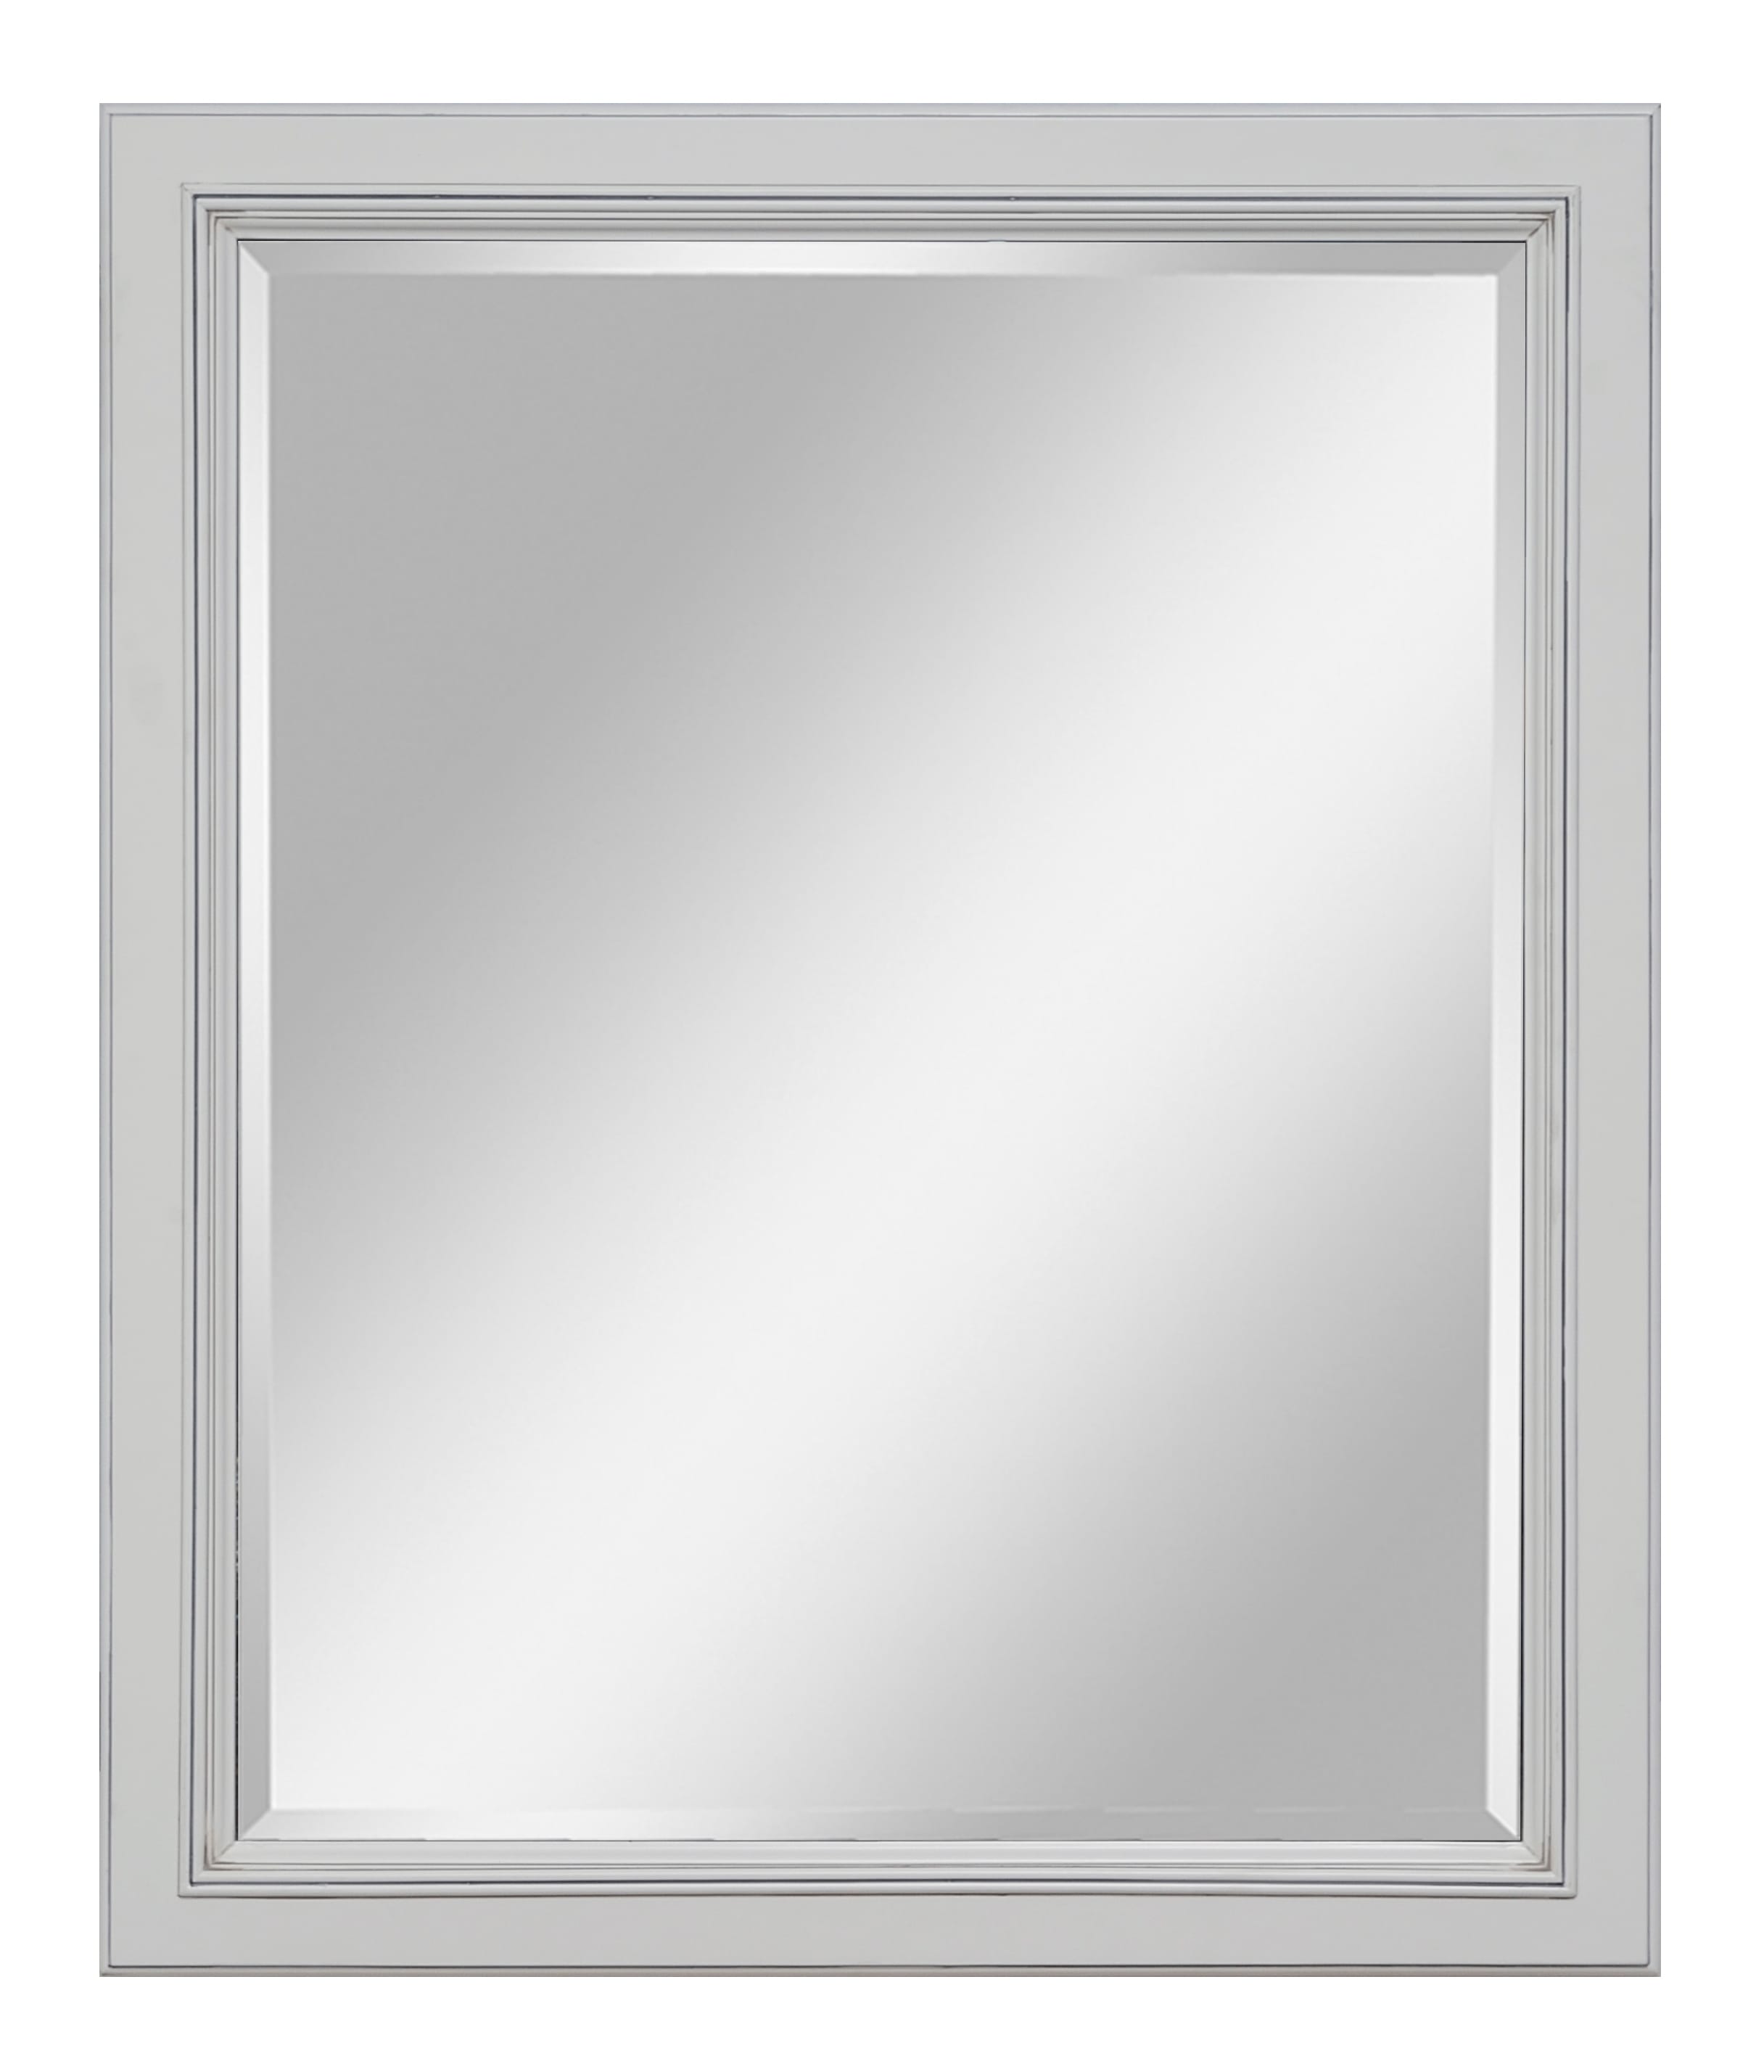 Sunny Wood Rl3036mr Fresh White With, White Framed Bathroom Mirror 30 X 36